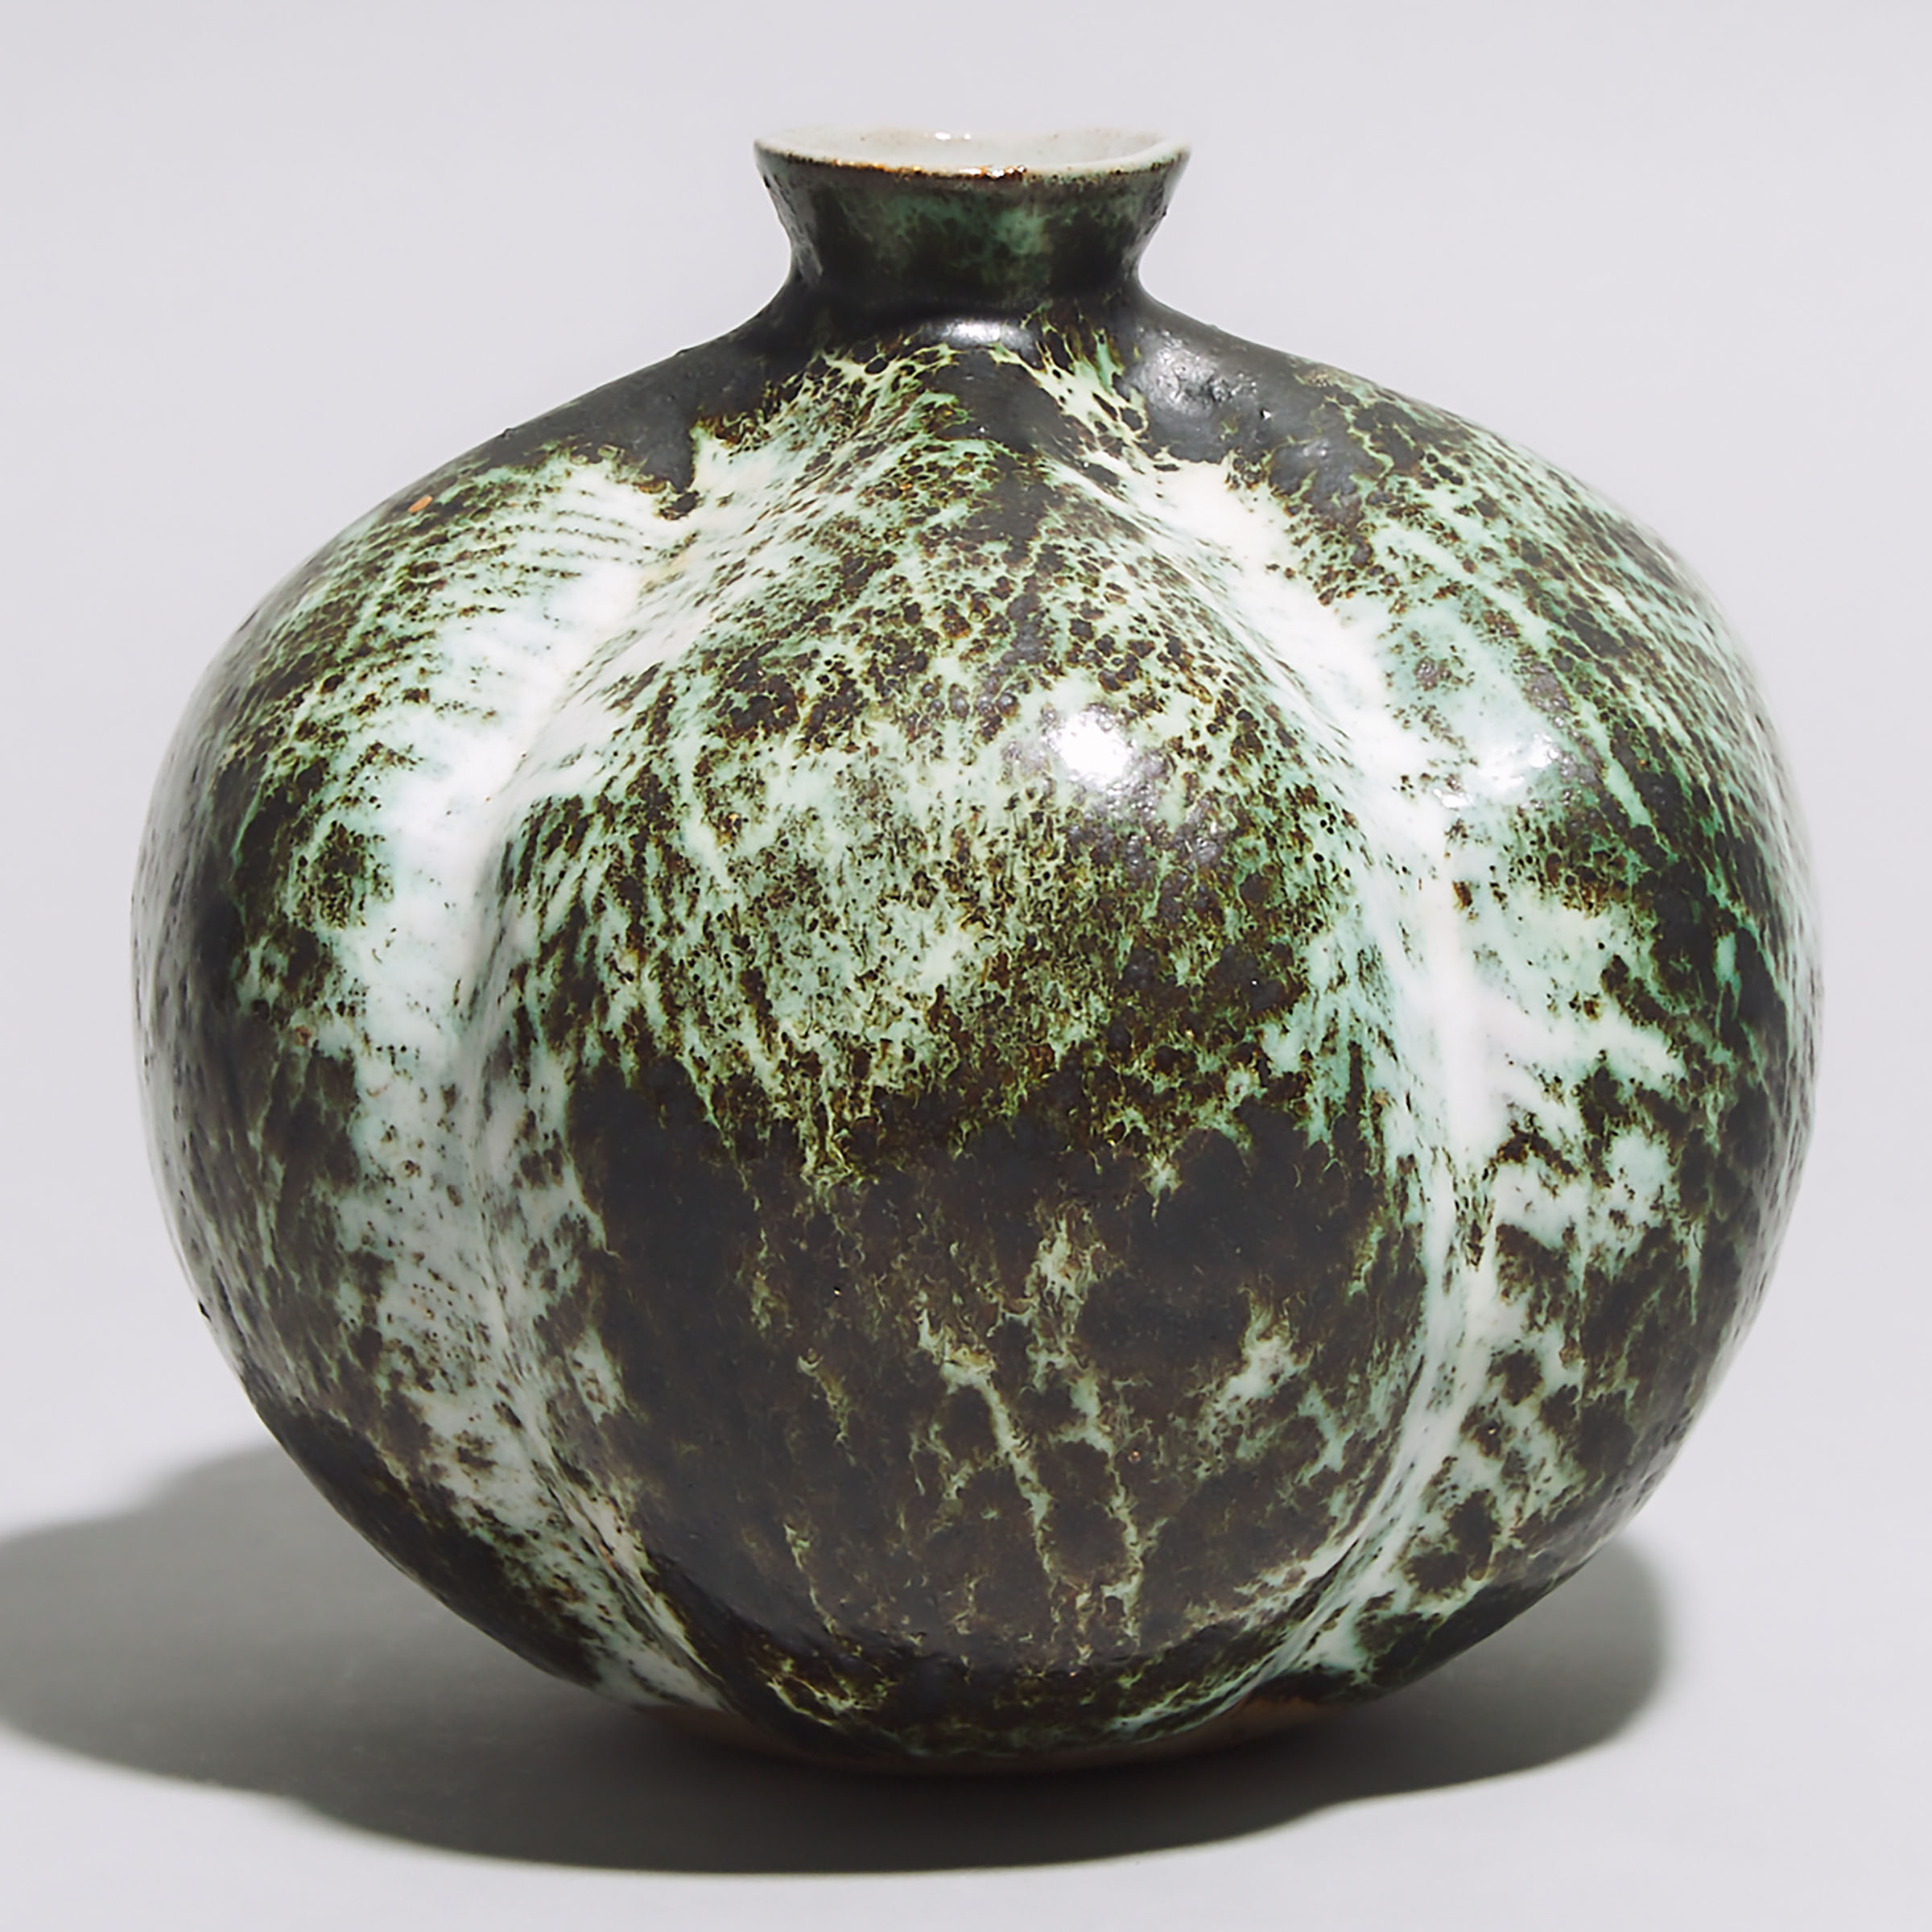 Tessa Kidick (Canadian, 1915-2002), Stoneware Vase, c.1970